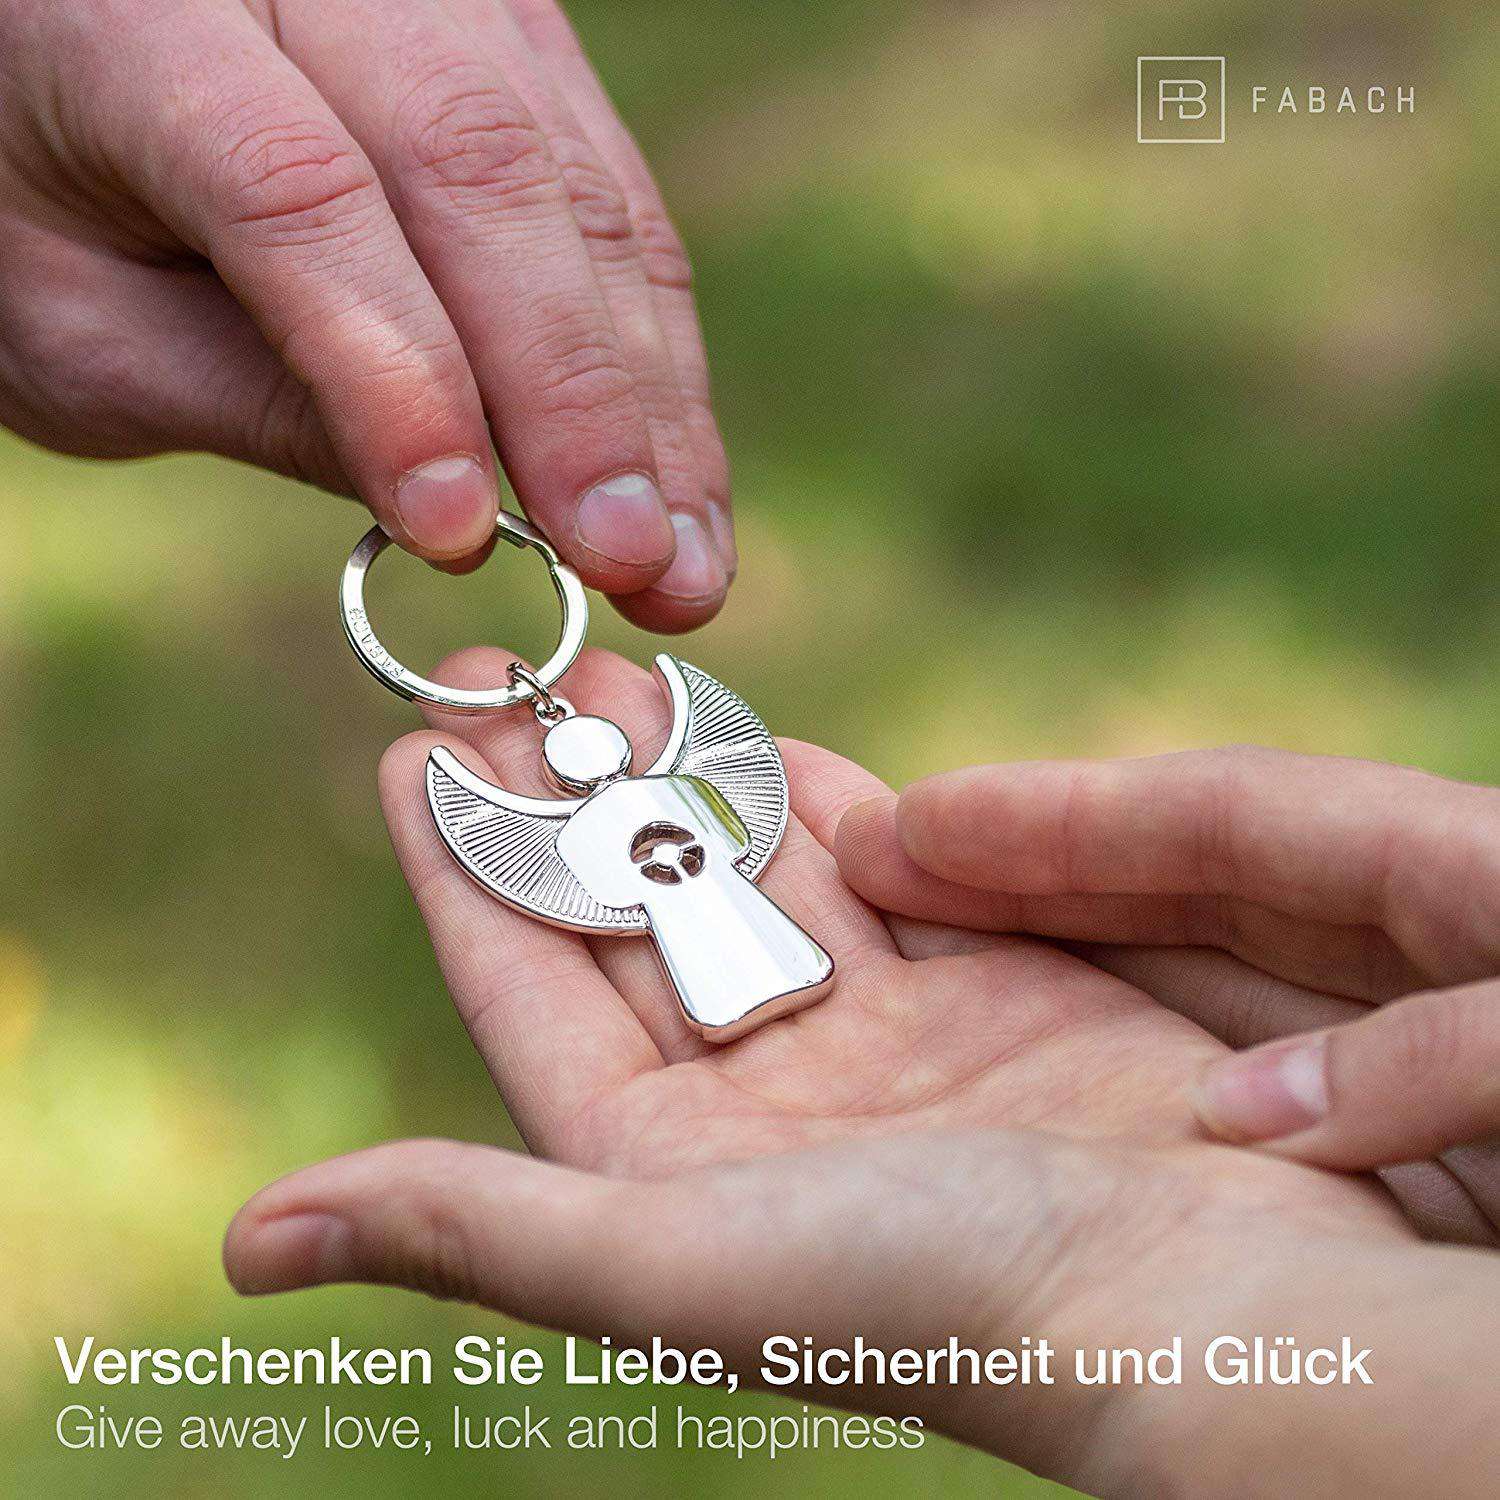 "Pikto" Schutzengel Schlüsselanhänger mit Lenkrad - Engel Glücksbringer